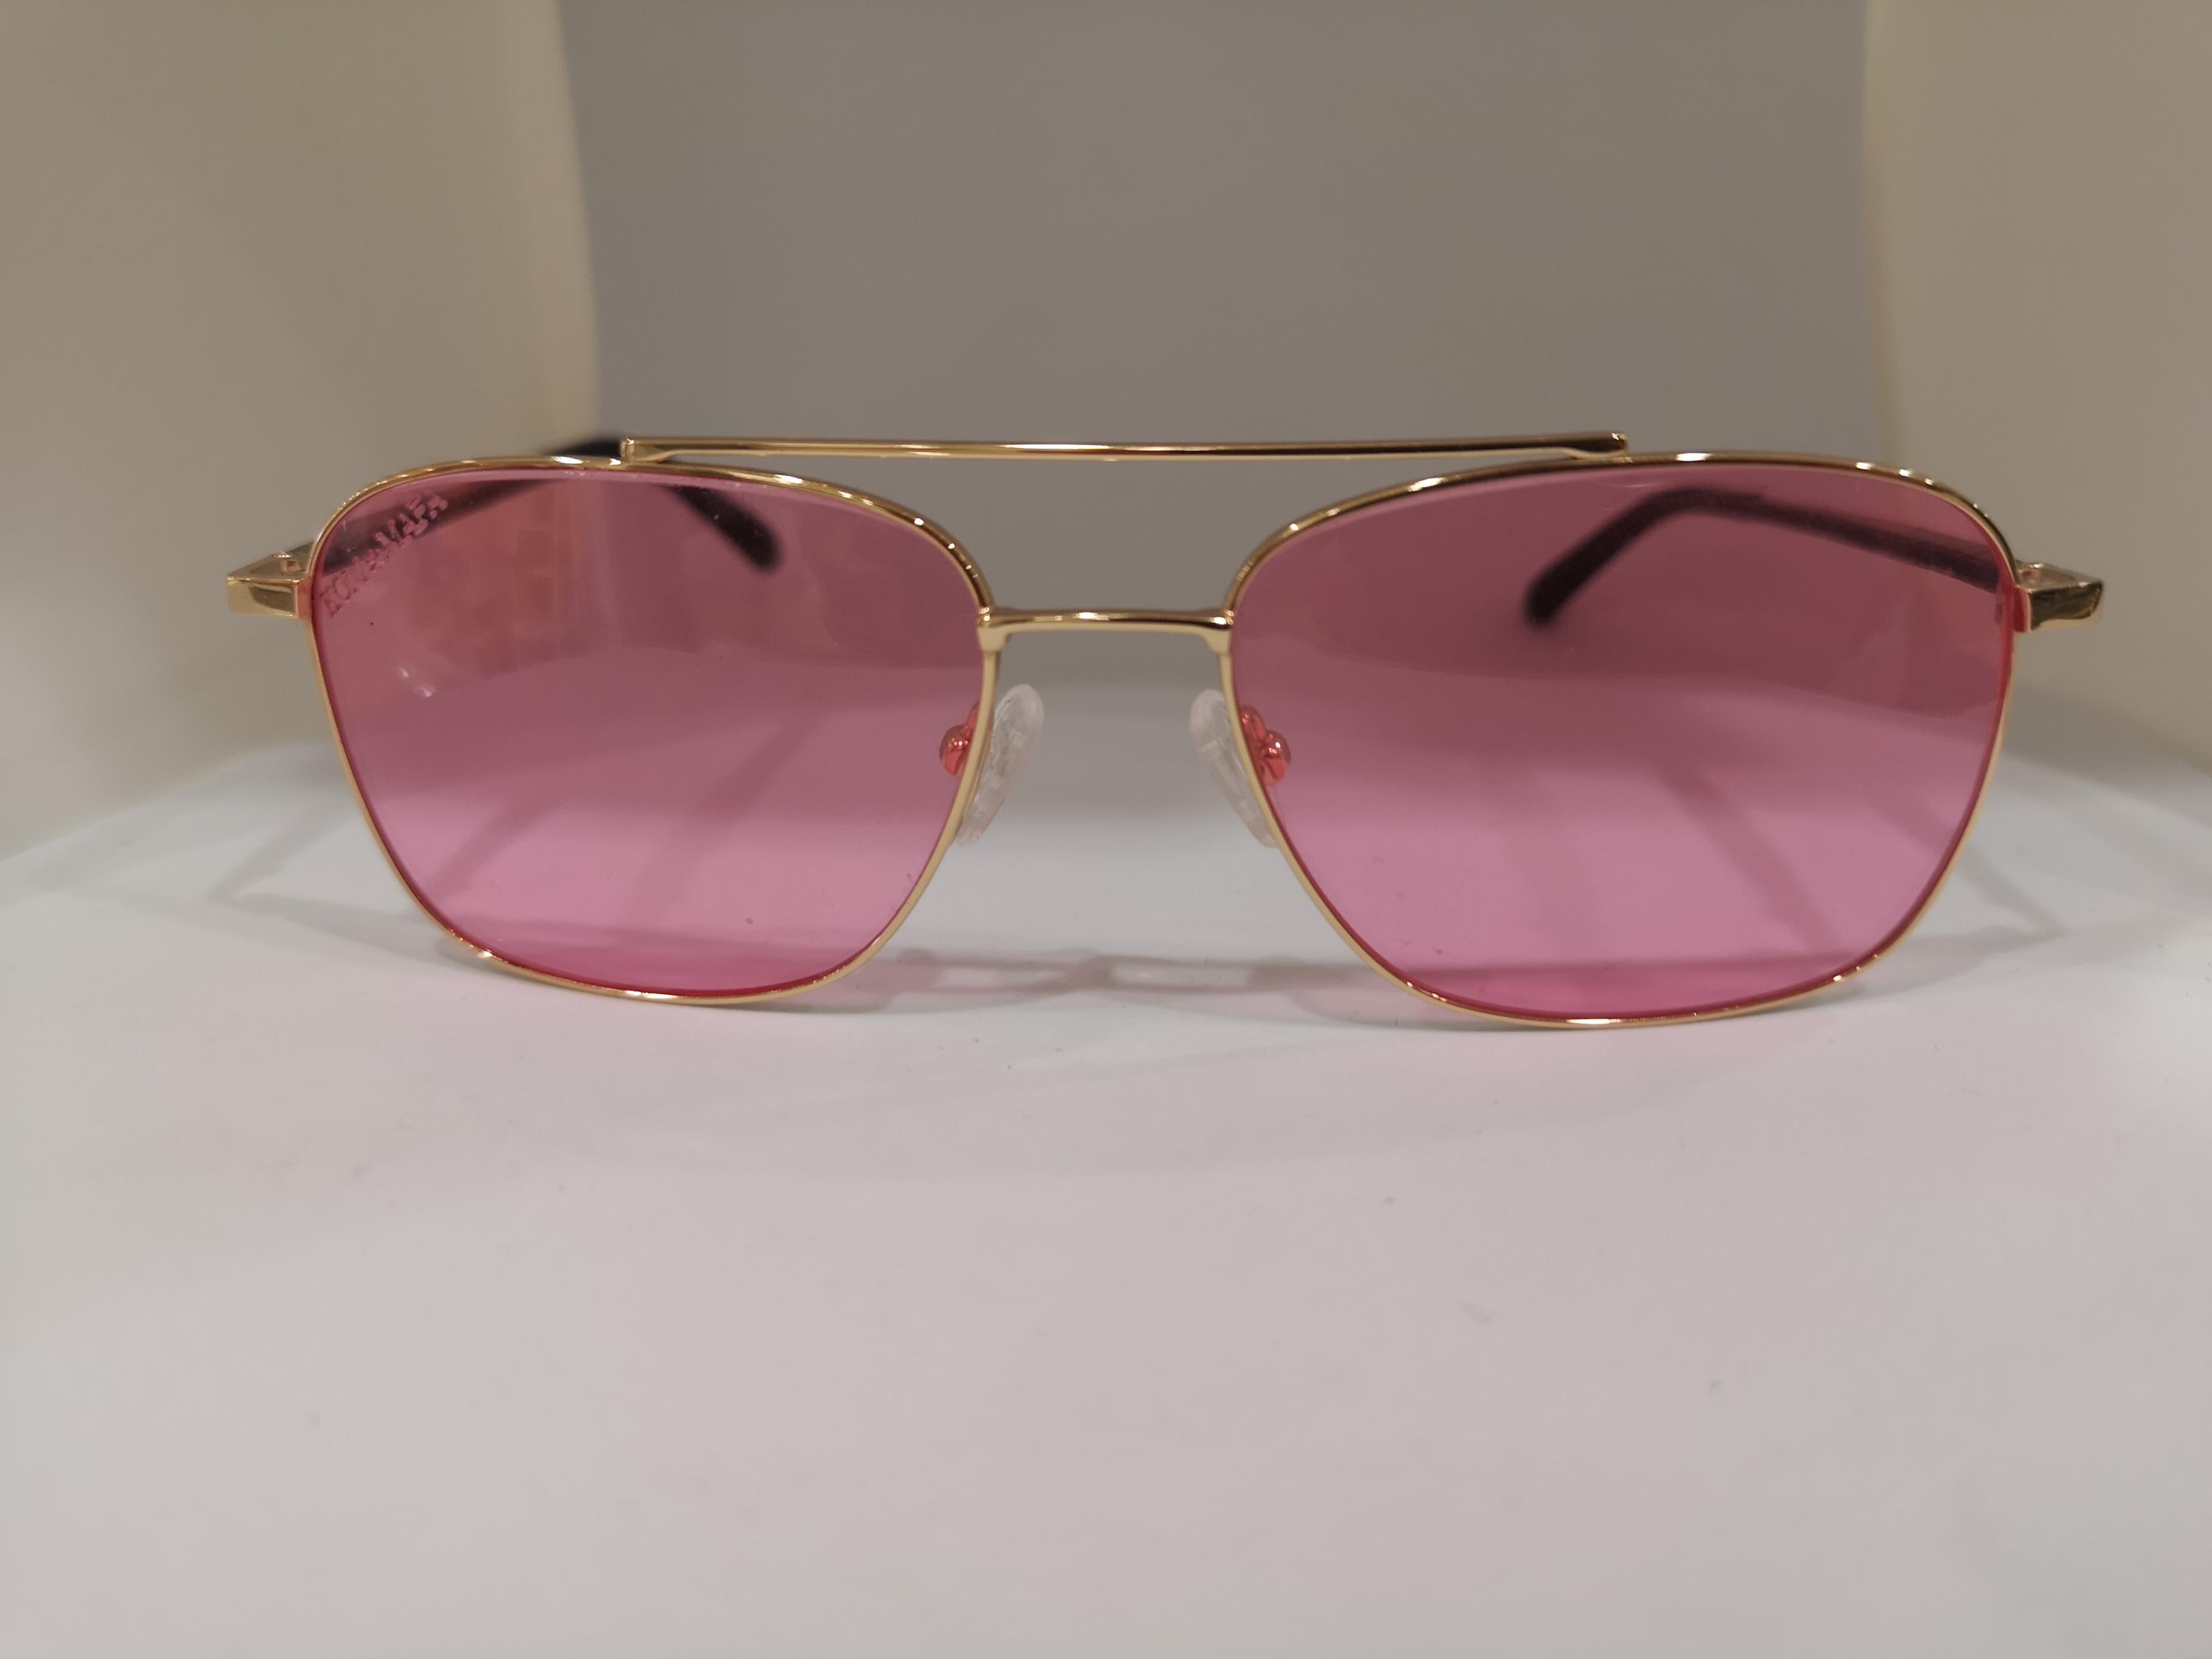 Kommafa pink lens sunglasses
totally handmade in italy 
unique piece